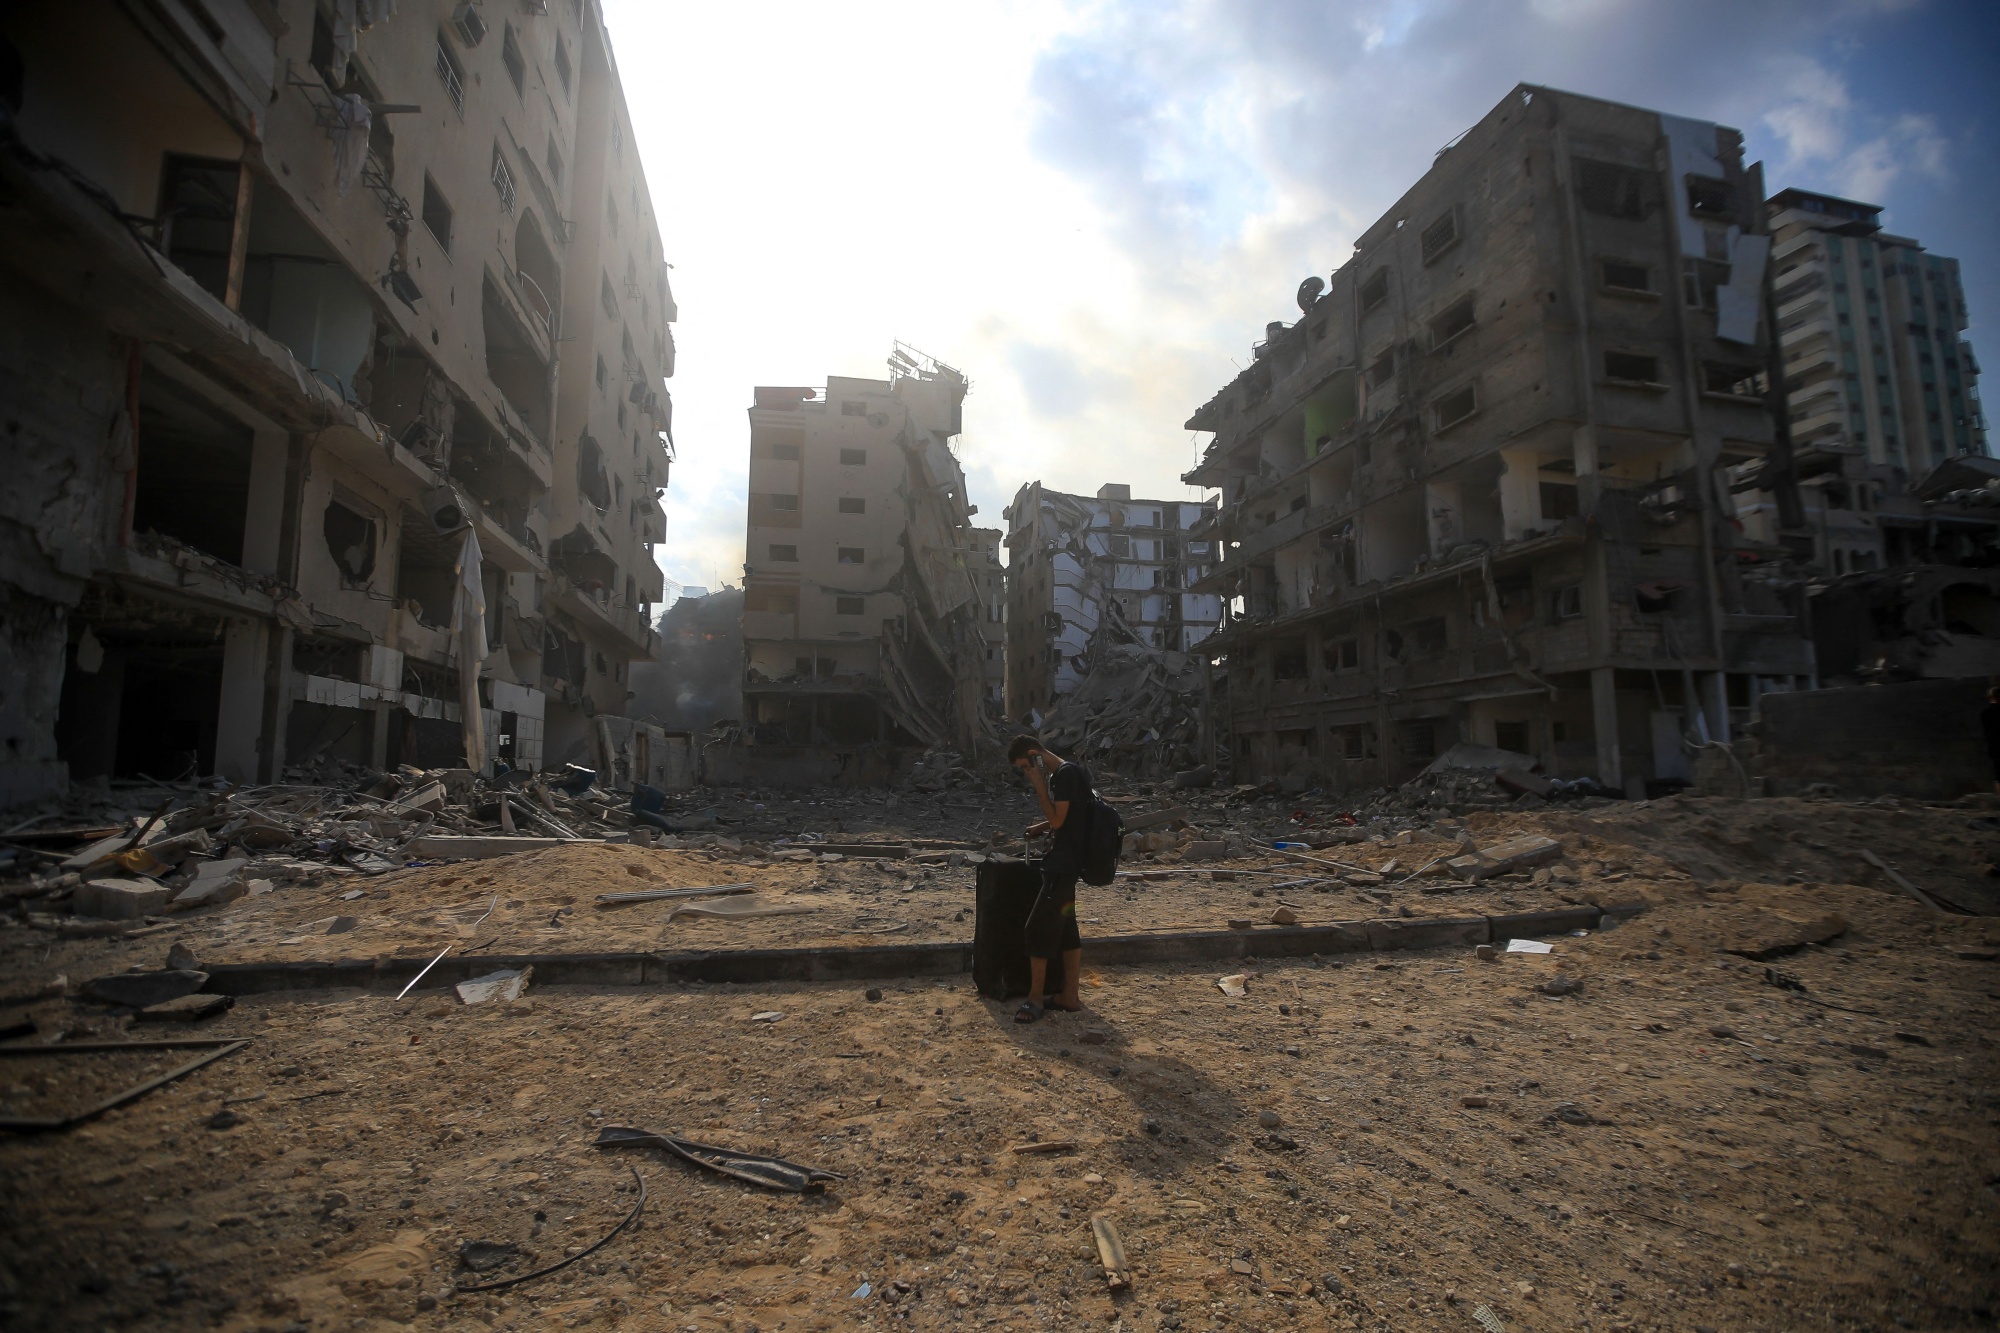 Israel Palestine War:1 Million People Fled, Life-Saving Essentials Run Out  In Gaza: UN